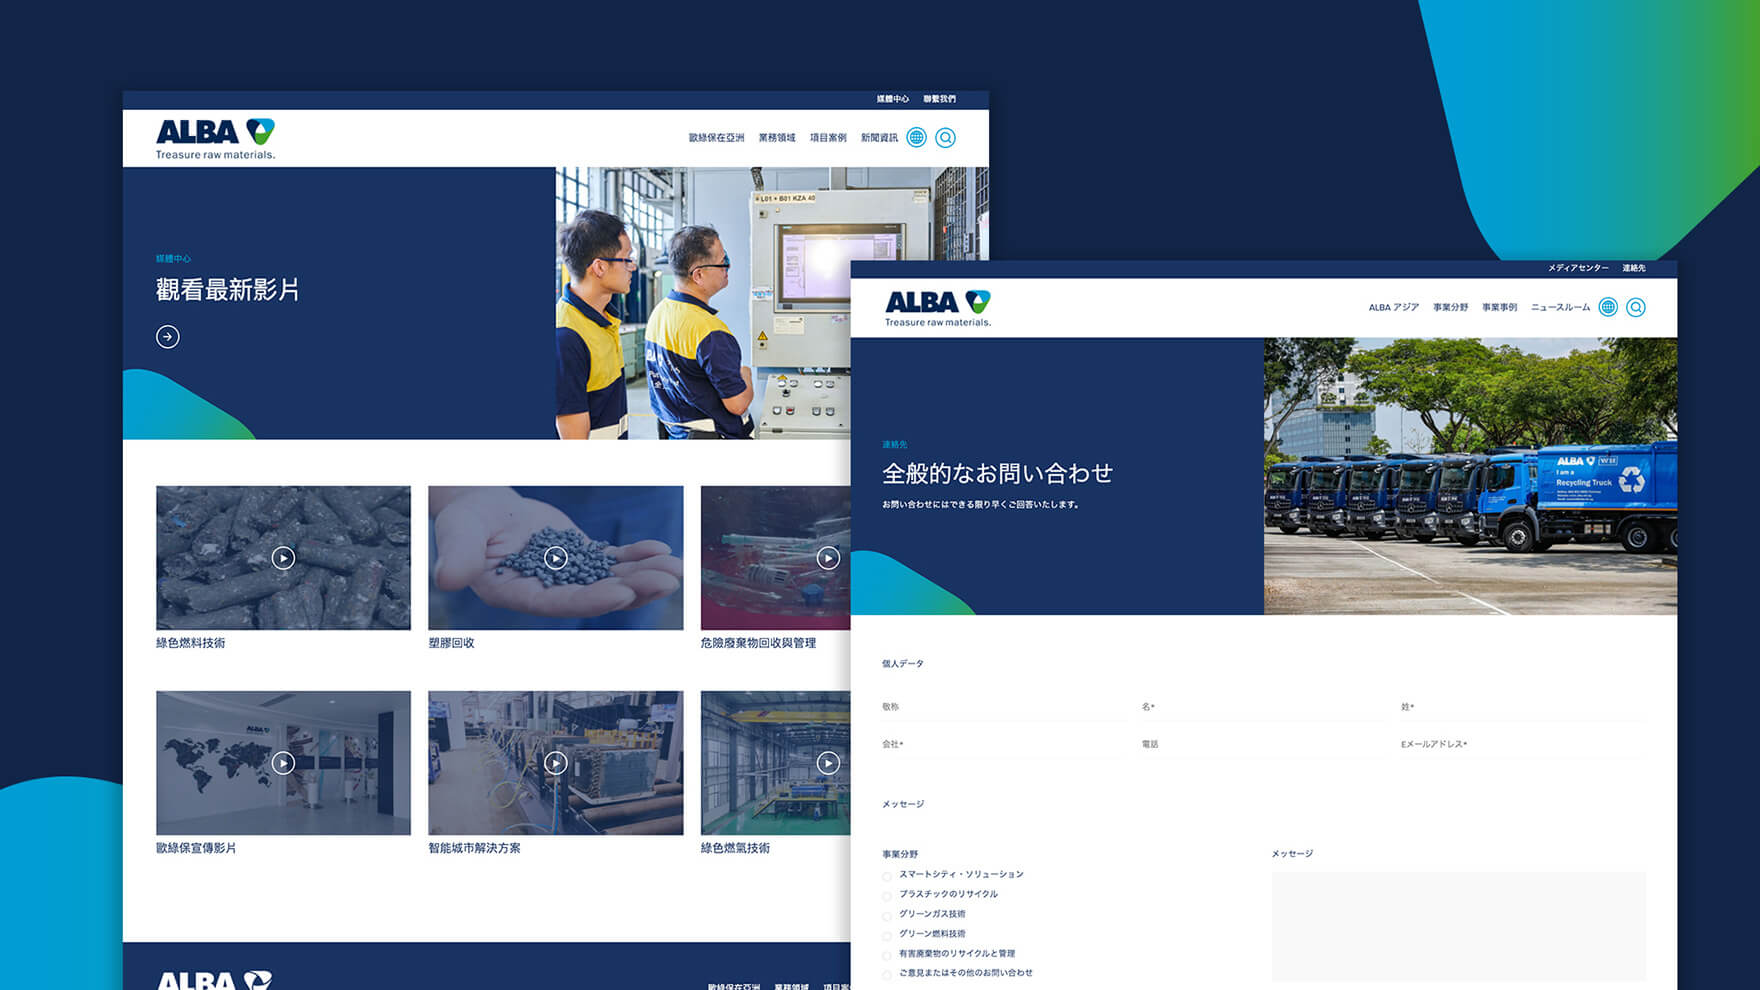 Website Design HK_ALBAGroupAsia_Responsive Website_CheddarMedia_6_1760